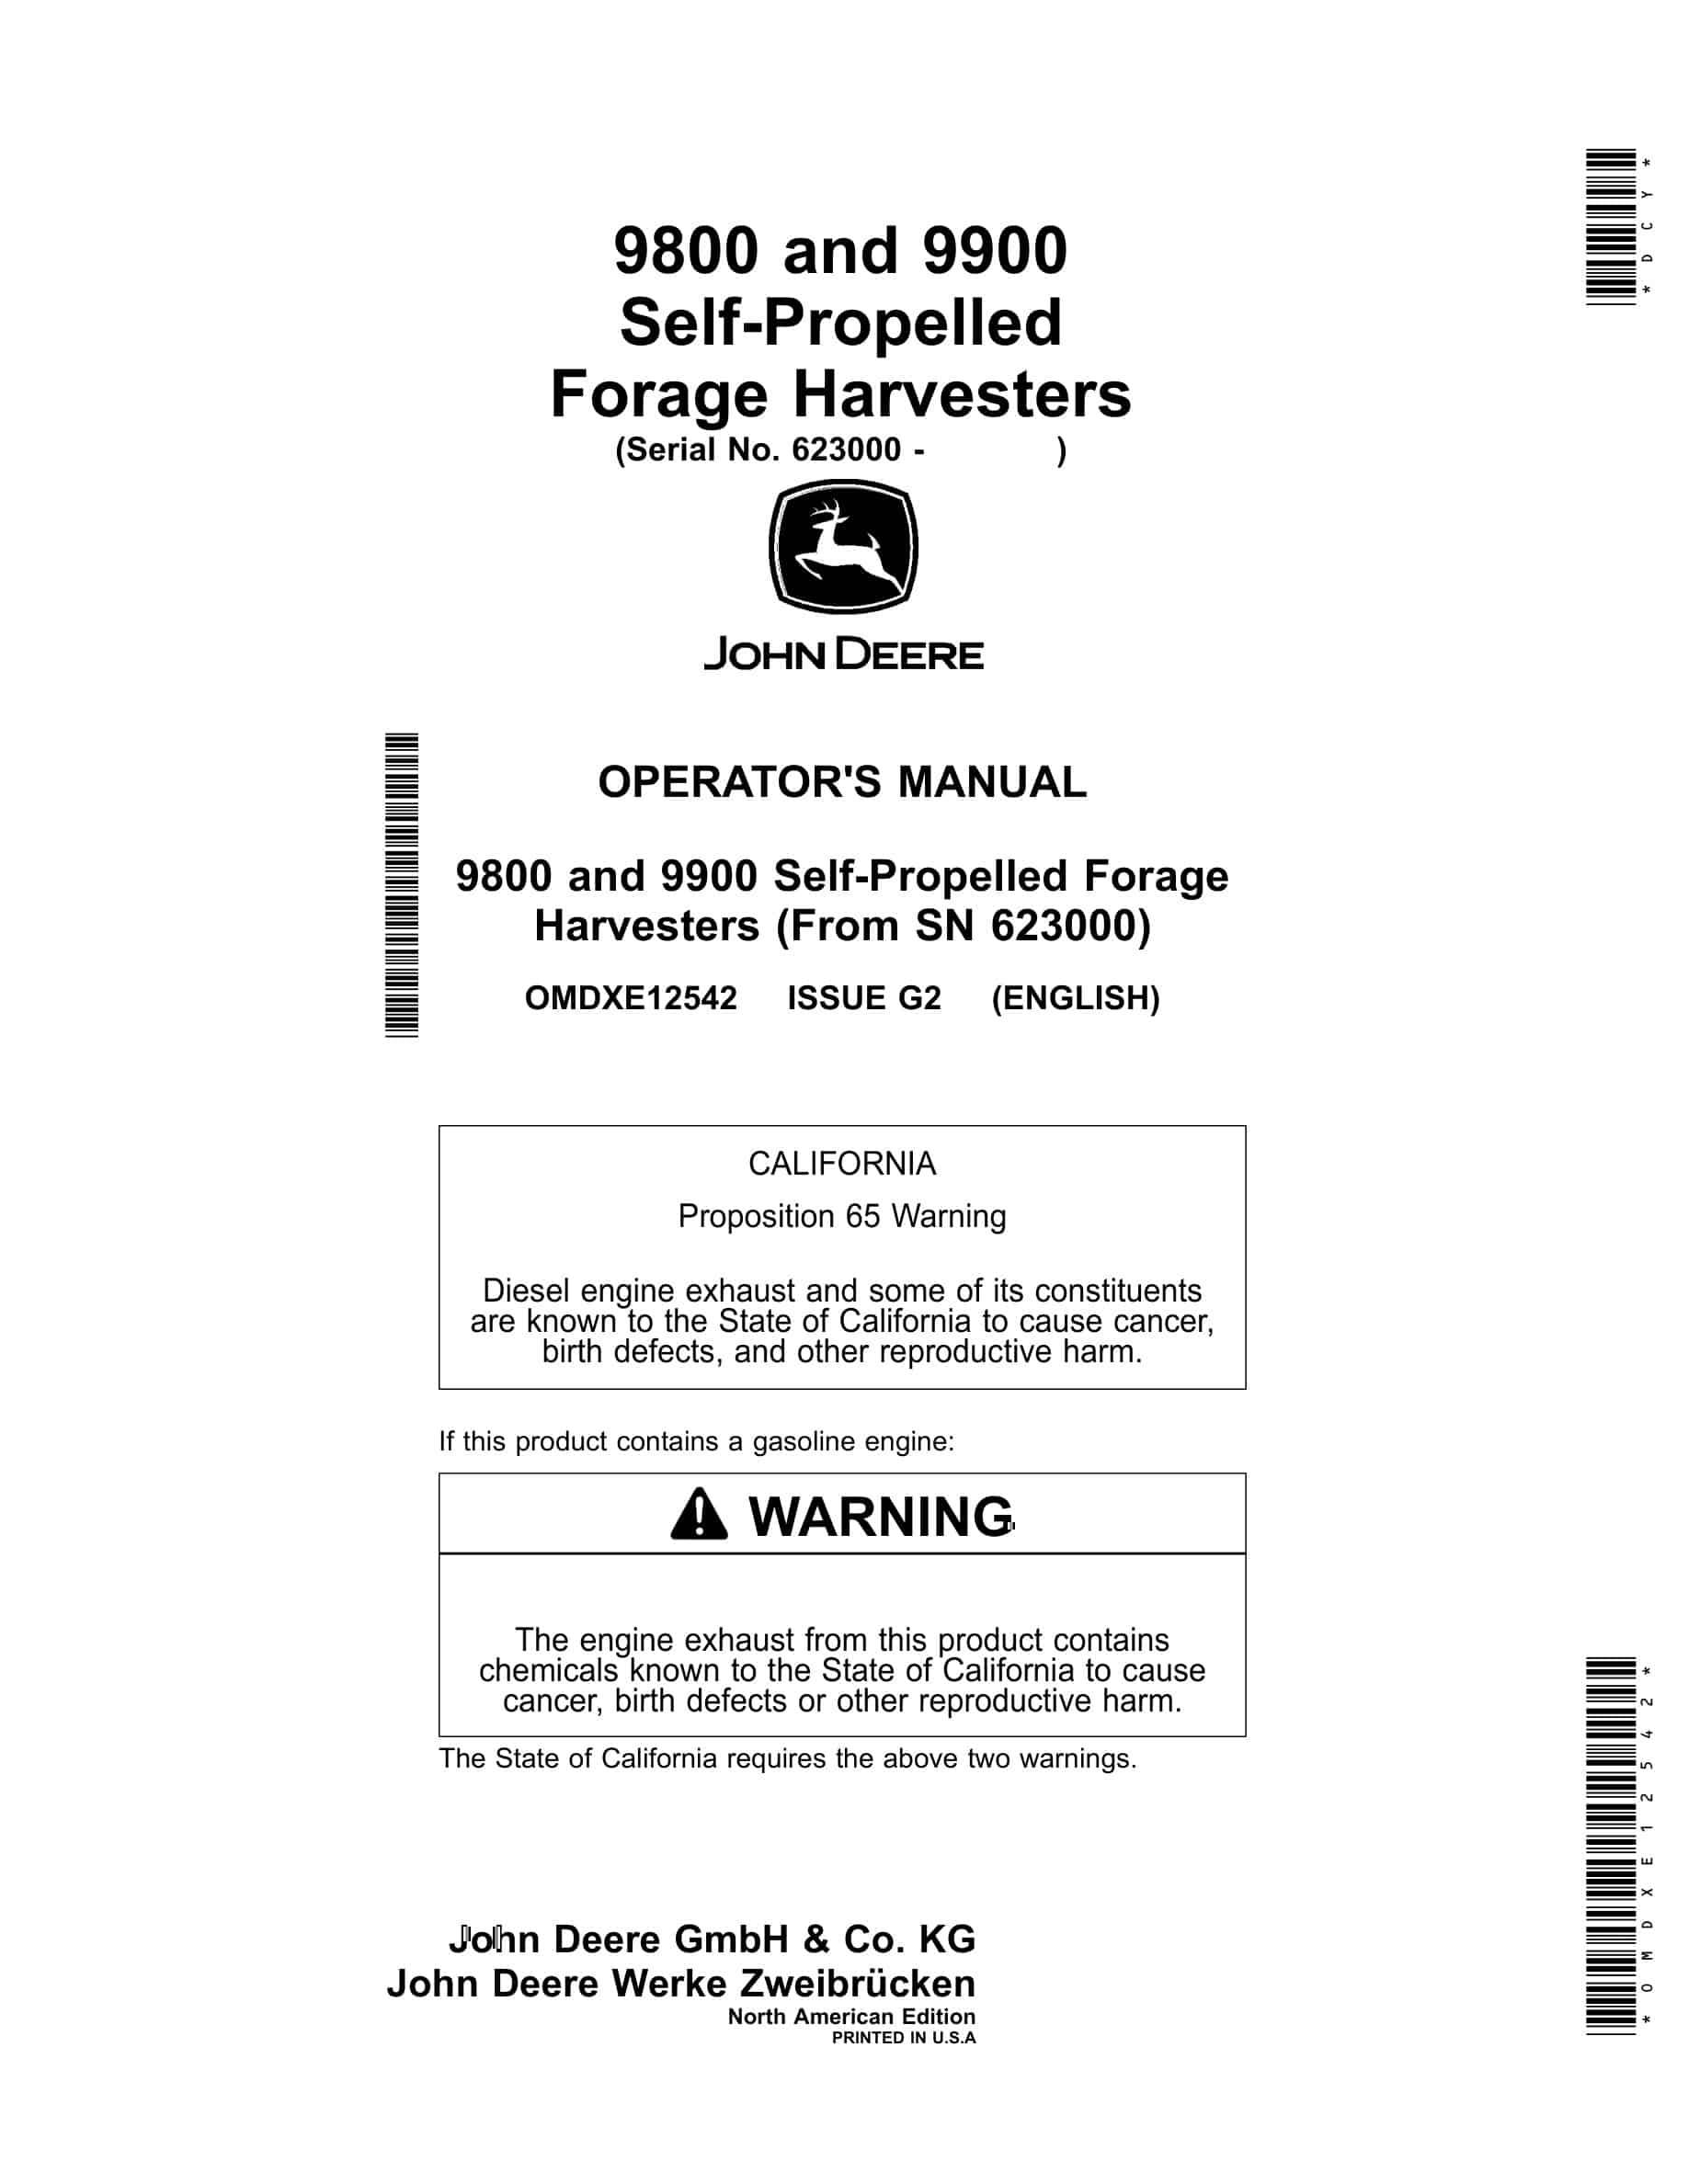 John Deere 9800 and 9900 Self-Propelled Forage Harvester Operator Manual OMDXE12542-1